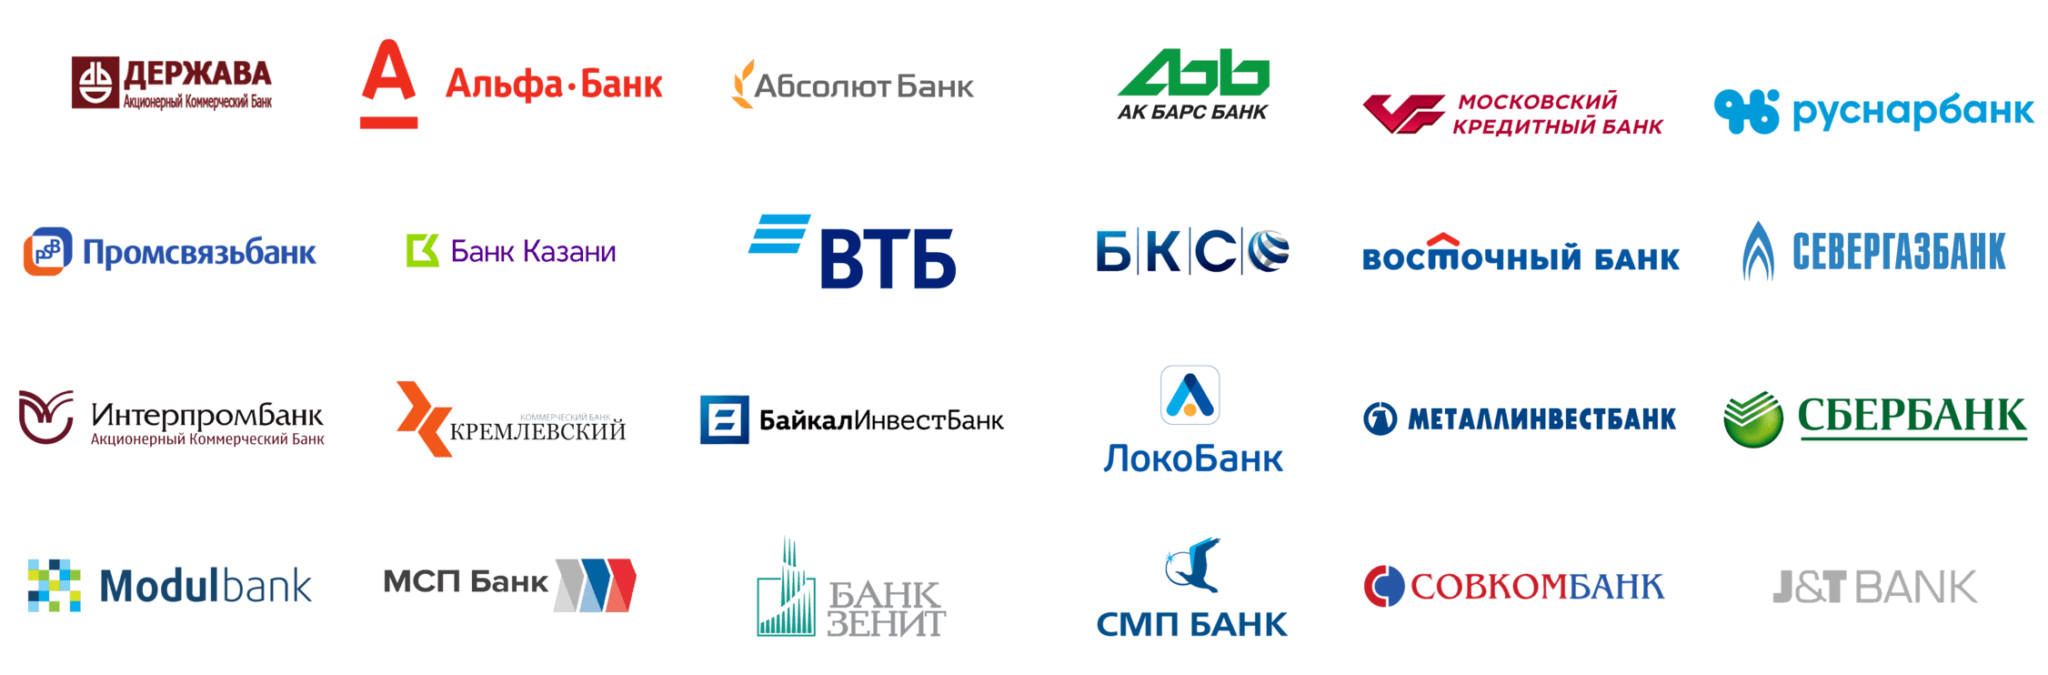 Партнеры втб банка кэшбэк. Банки партнеры. Логотипы банков. Партнёры ВТБ банка. Банки партнеры список.